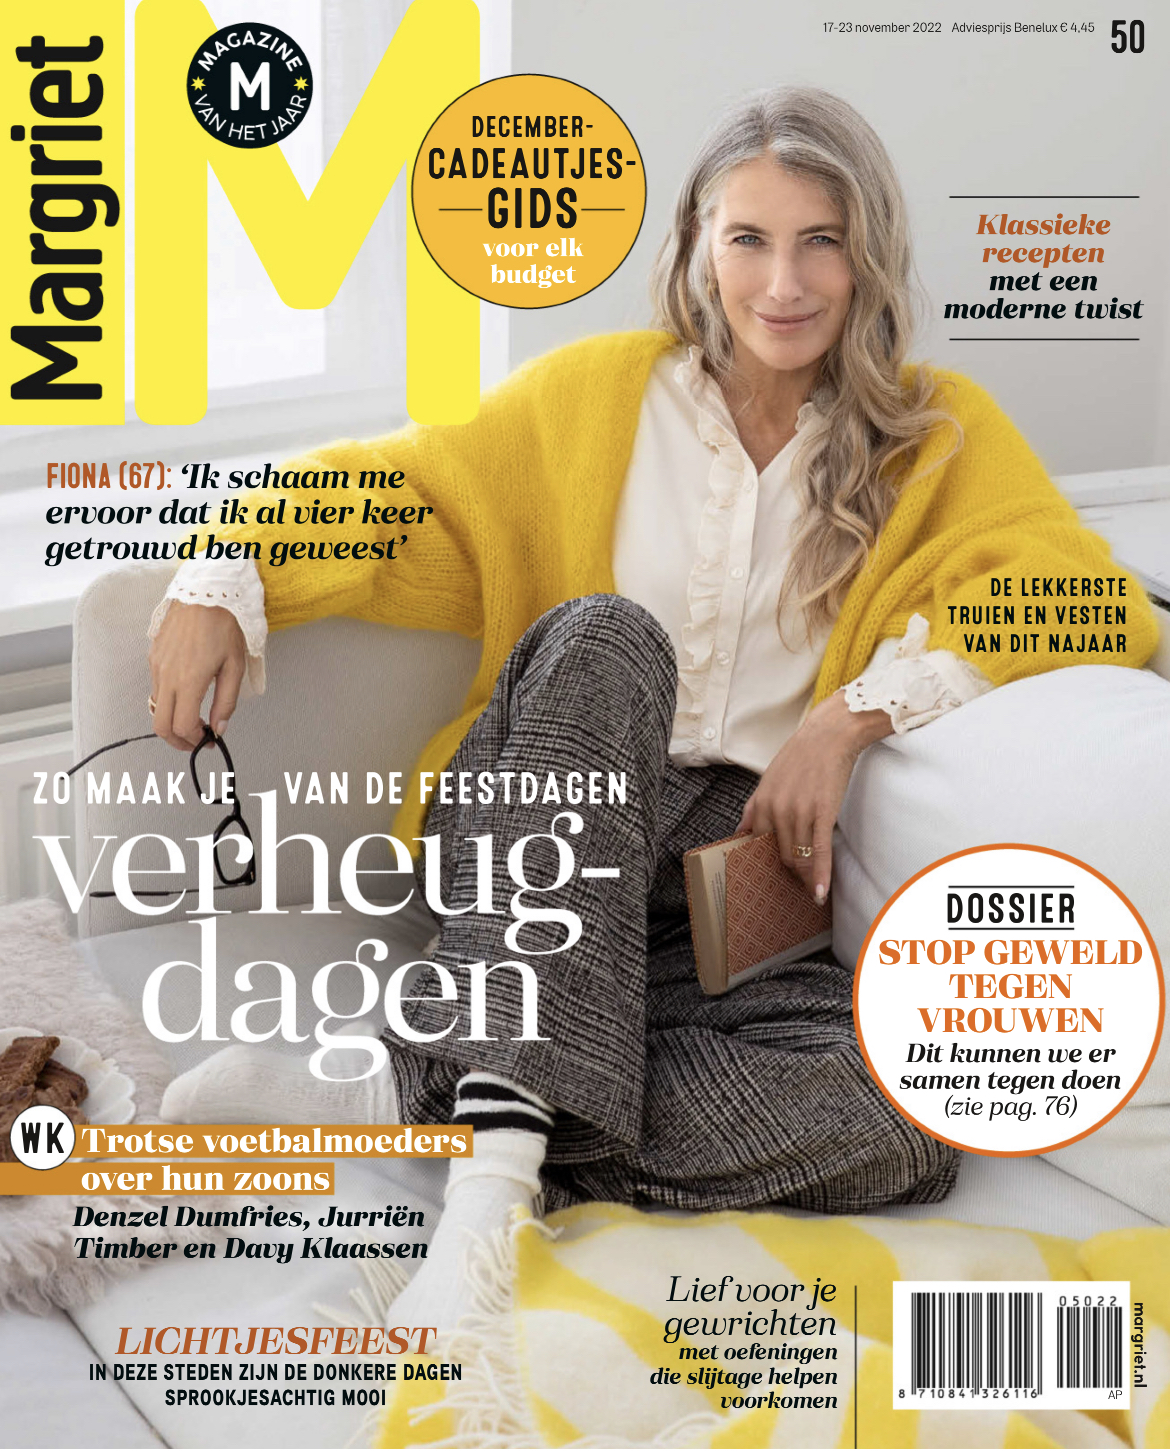 Tijdschrift Margriet 50 cover - november 2022